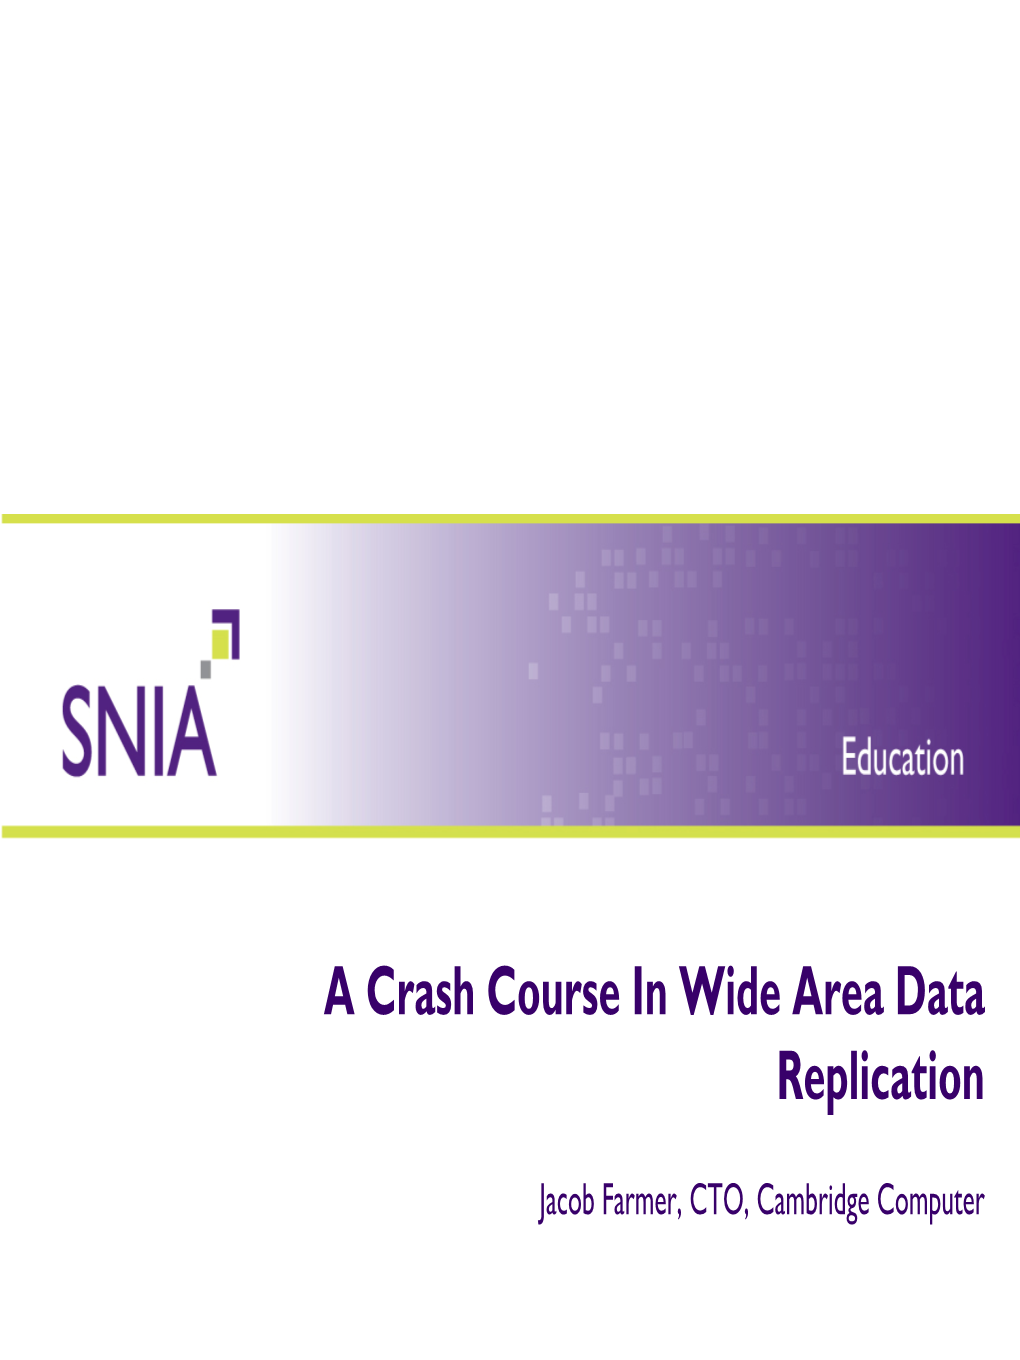 A Crash Course in Wide Area Data Replication